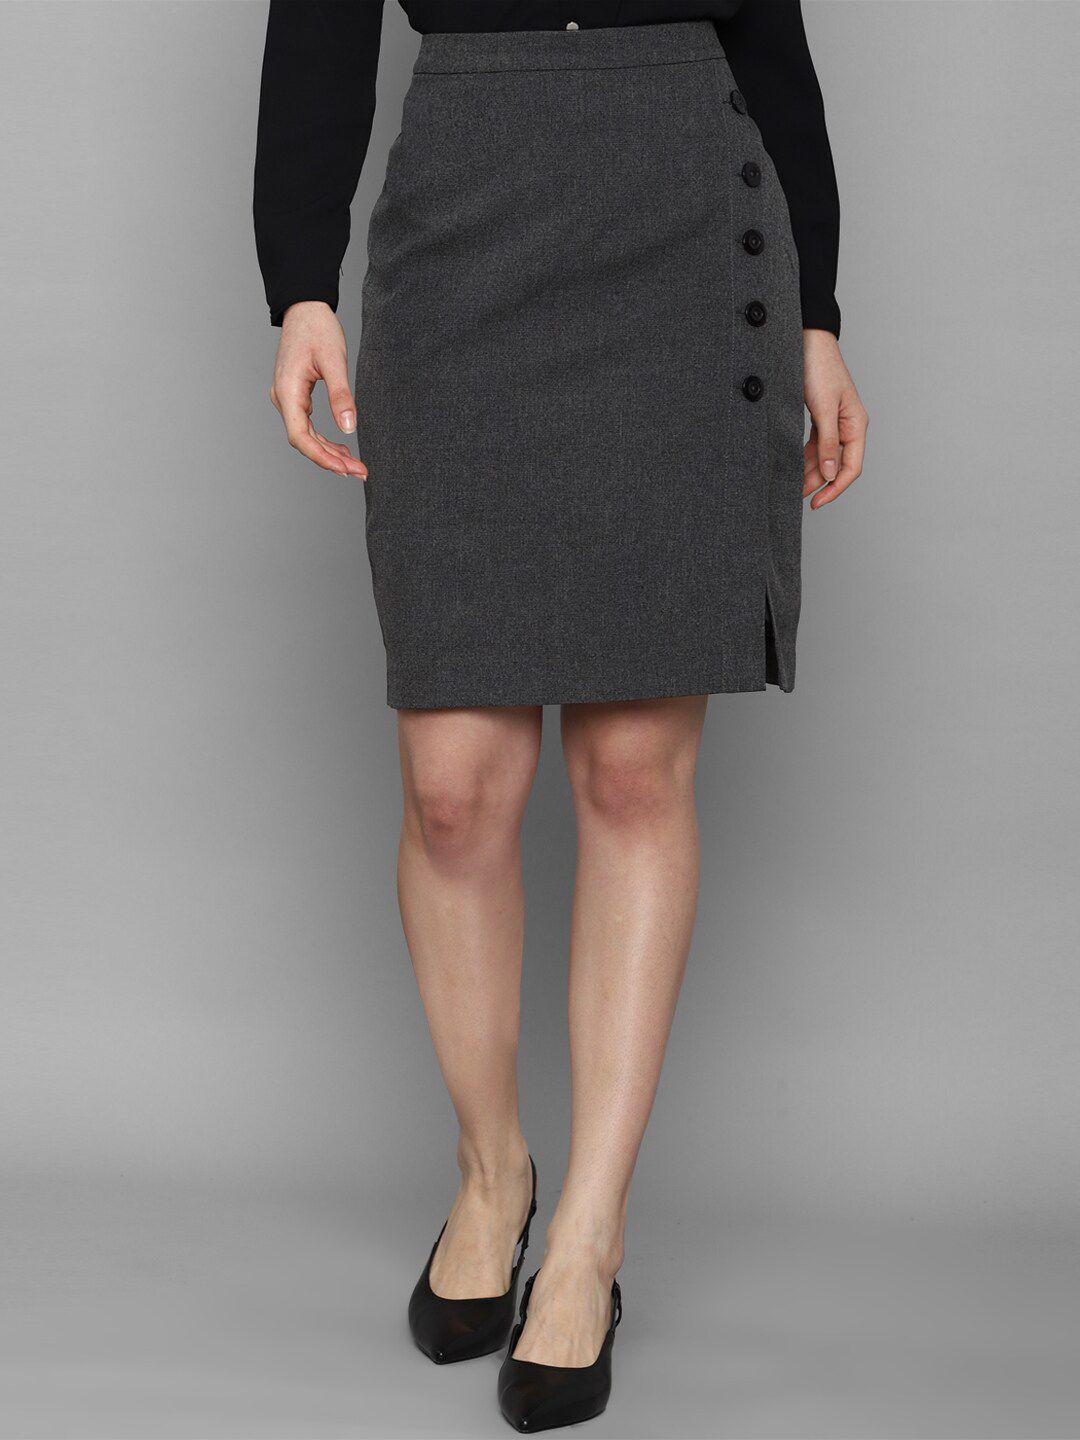 allen solly women grey self-design knee-length pencil skirt